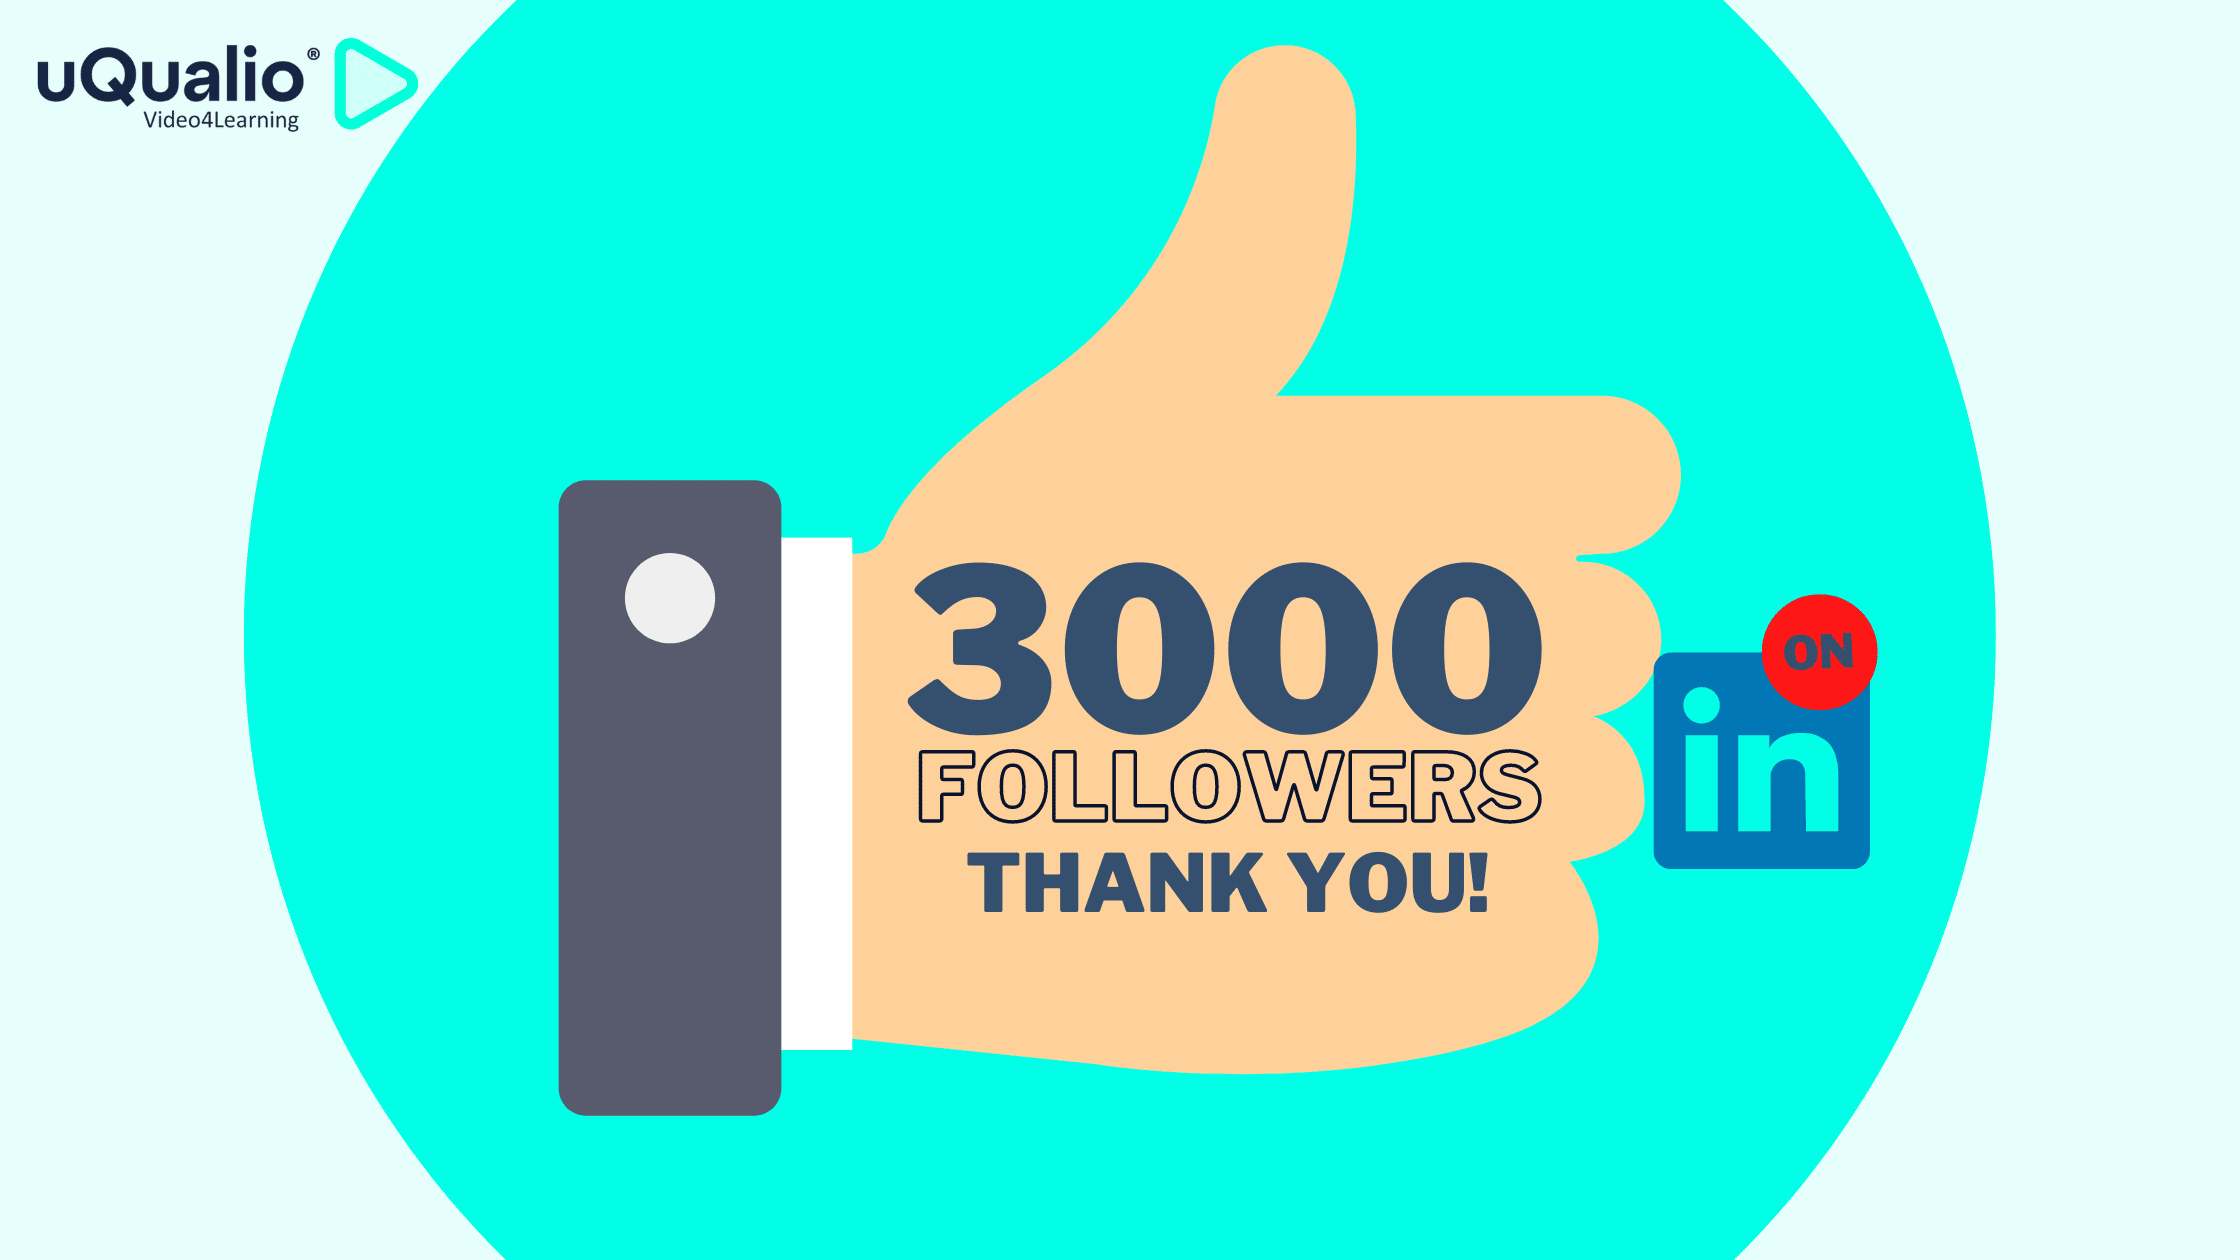 Milestone reached - 3000 followers on Linked